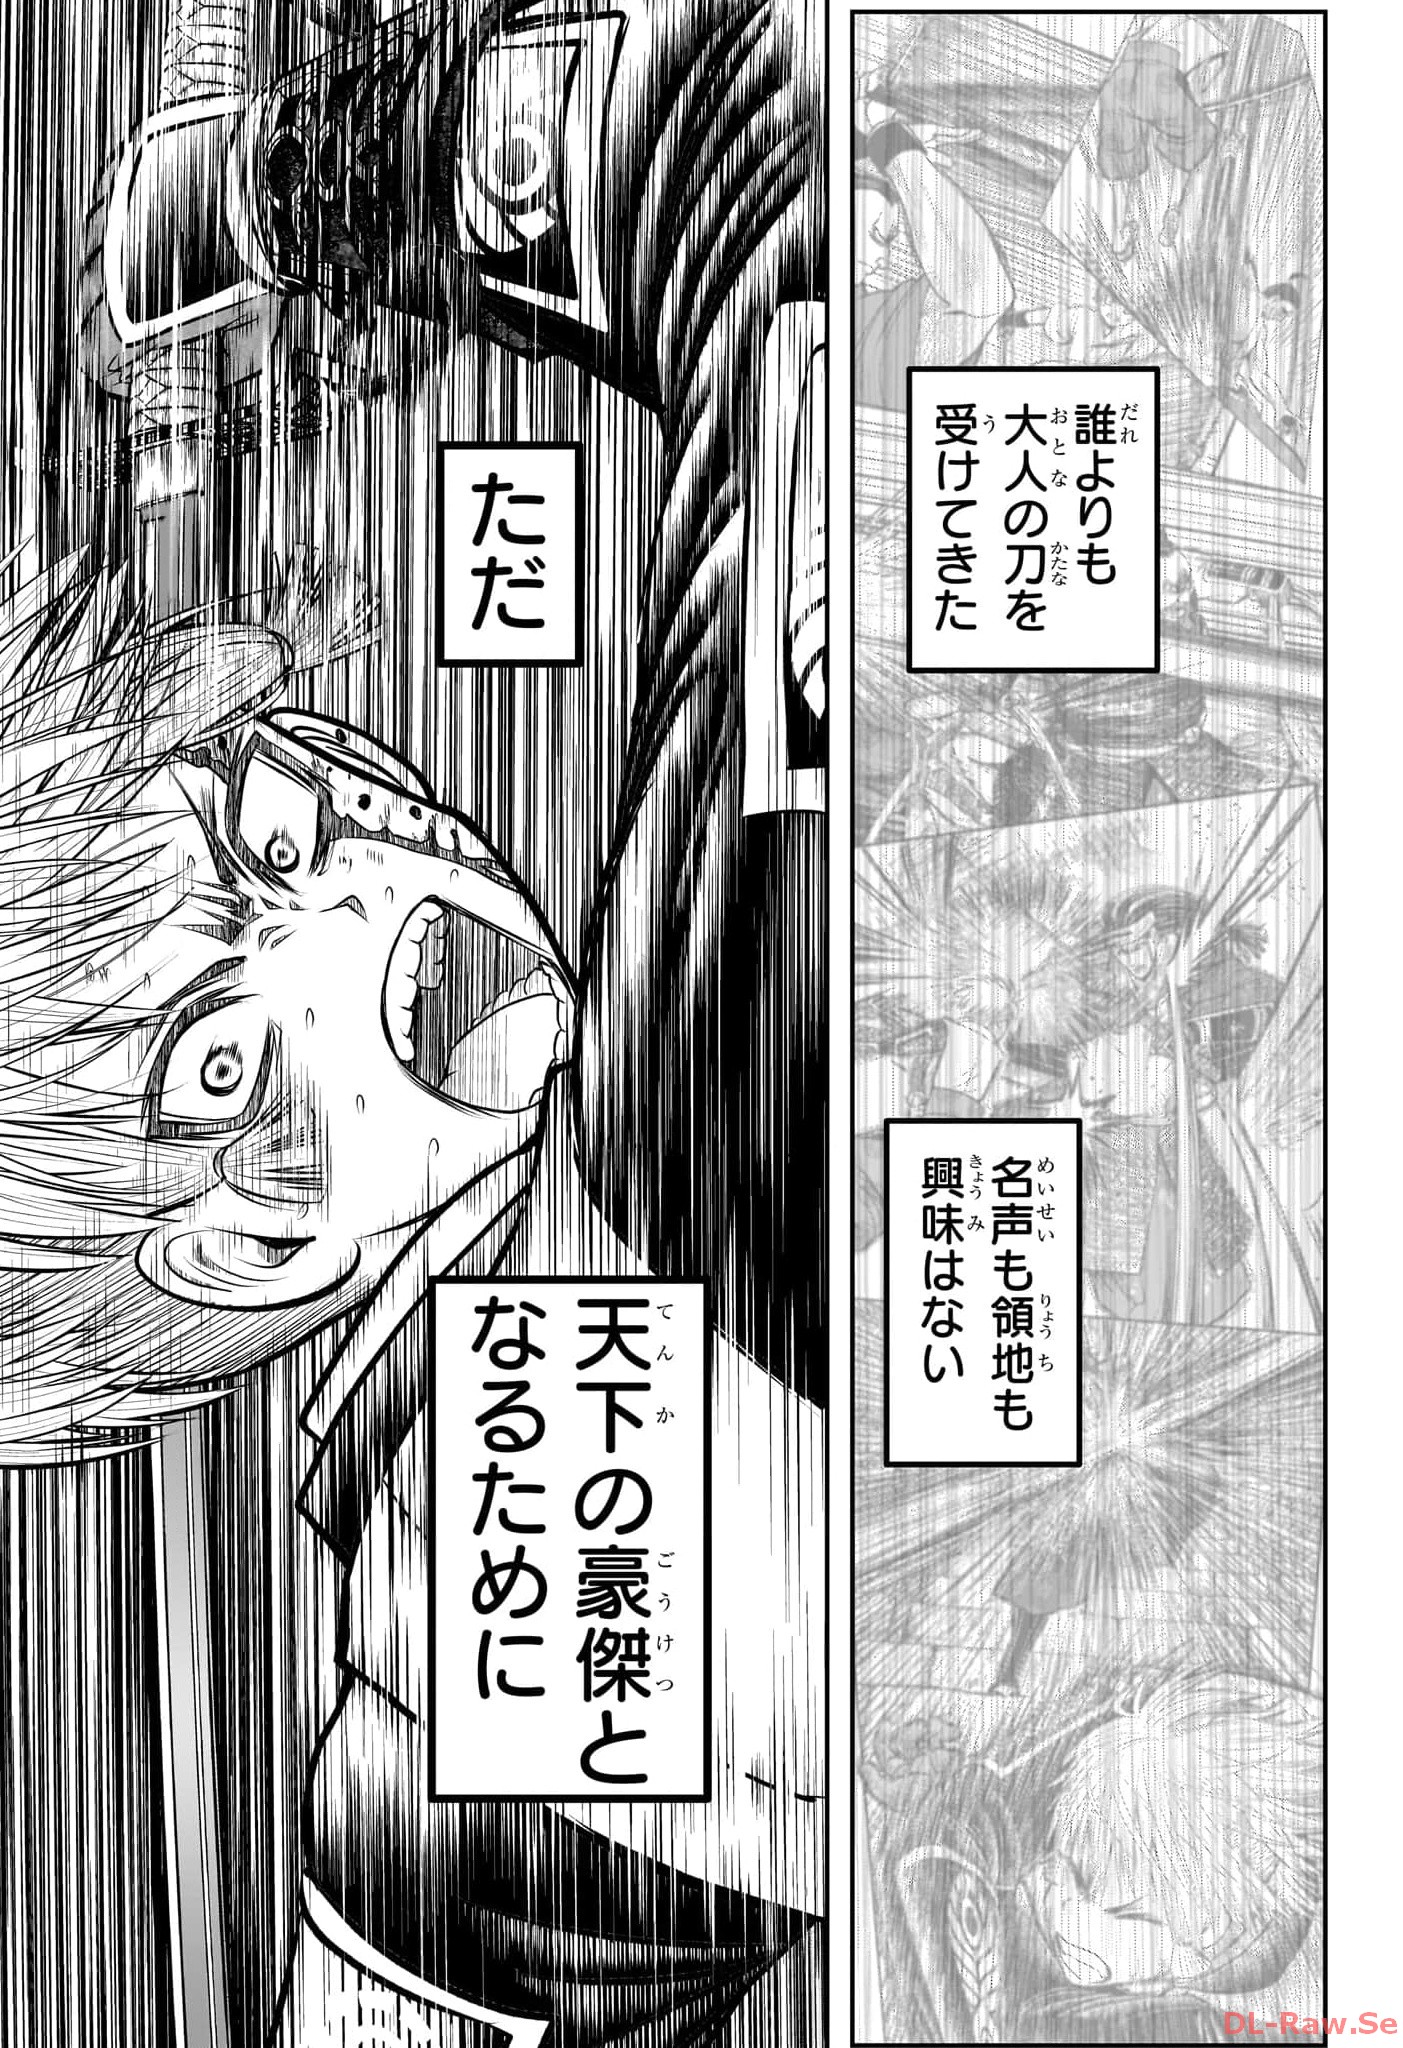 Nige Jouzu no Wakagimi - Chapter 140 - Page 3